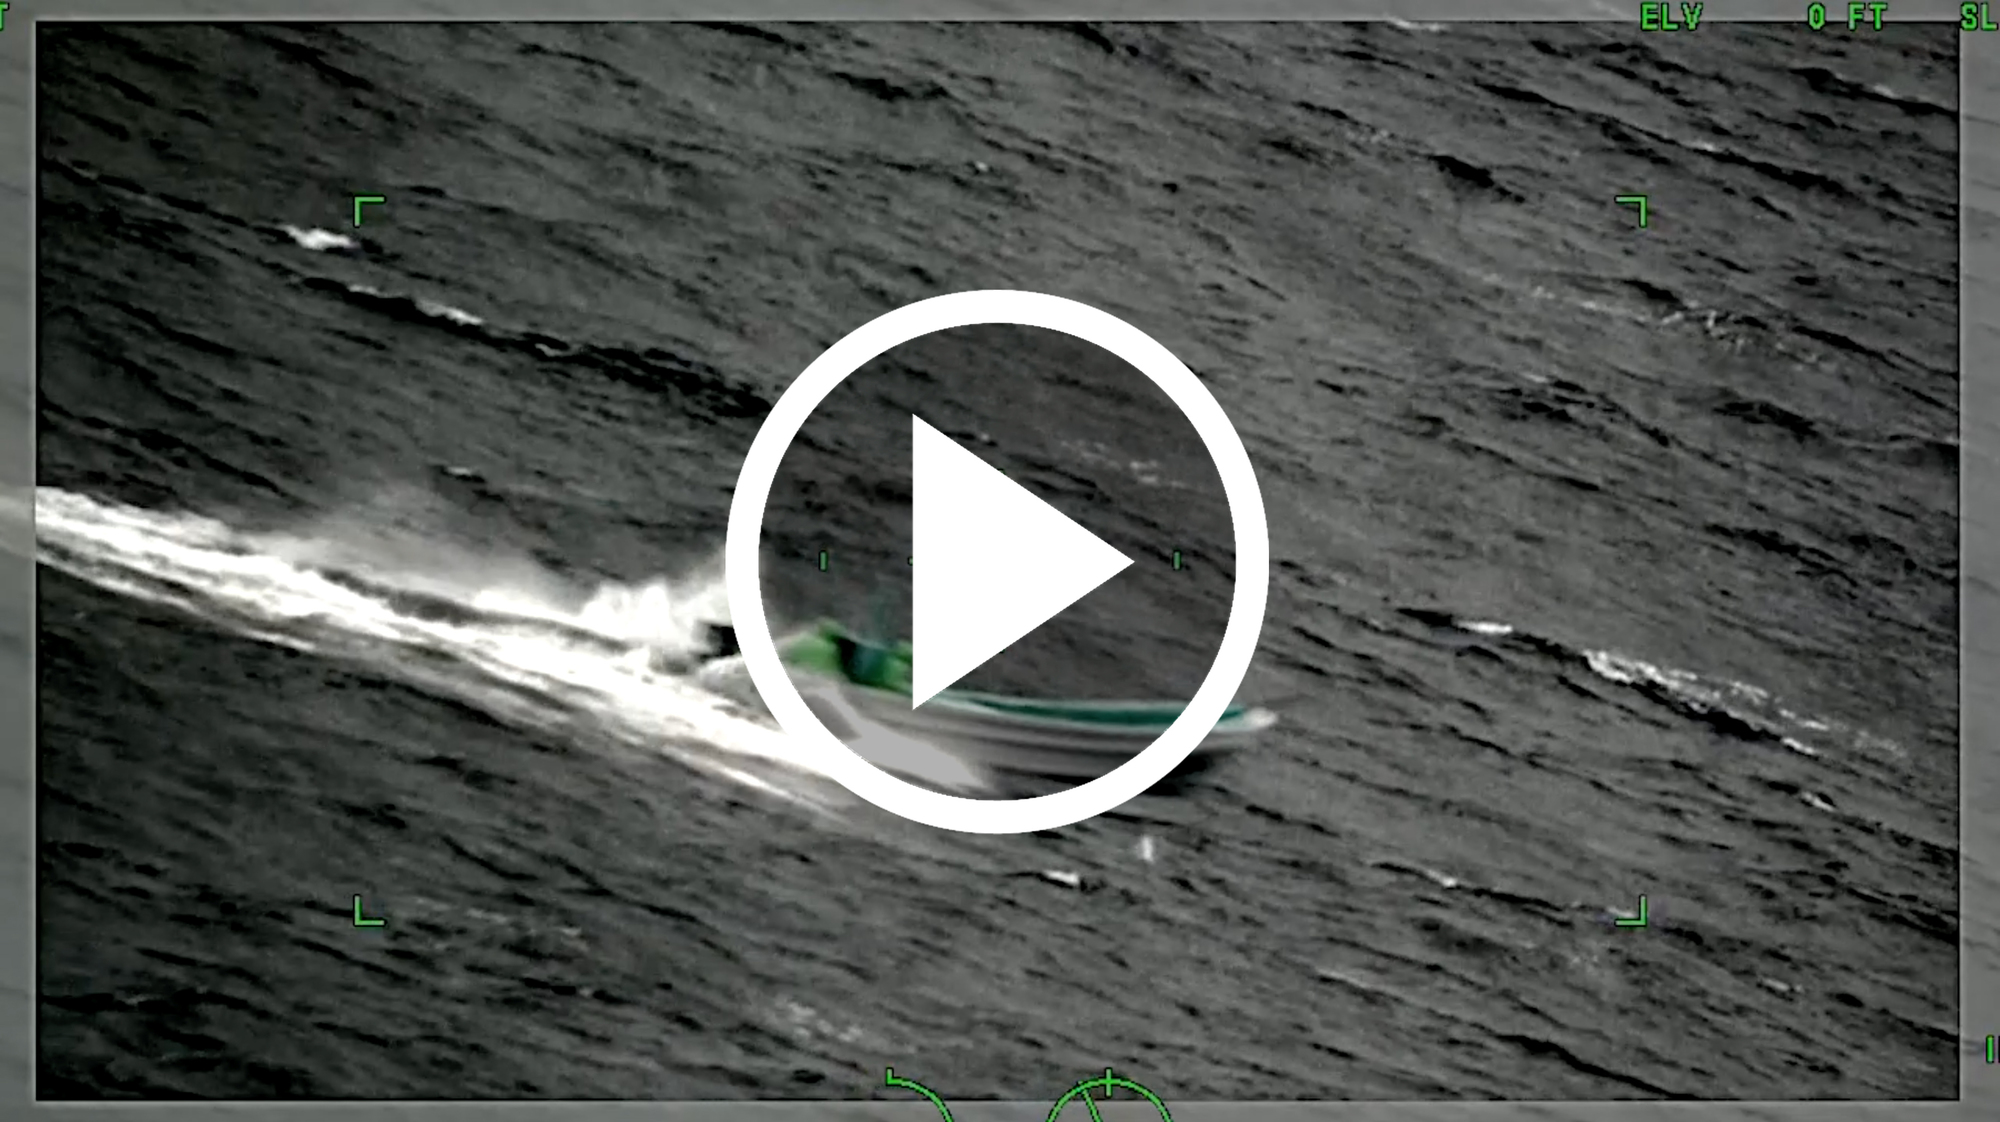 Coast Guard lancha detection aerial video